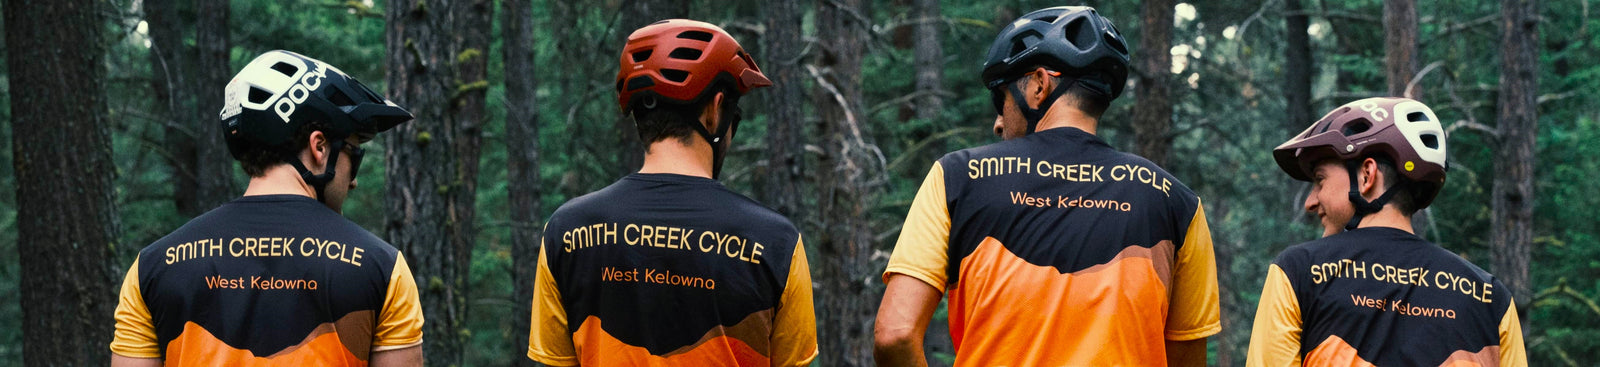 Smith Creek Cycle Team Photo 